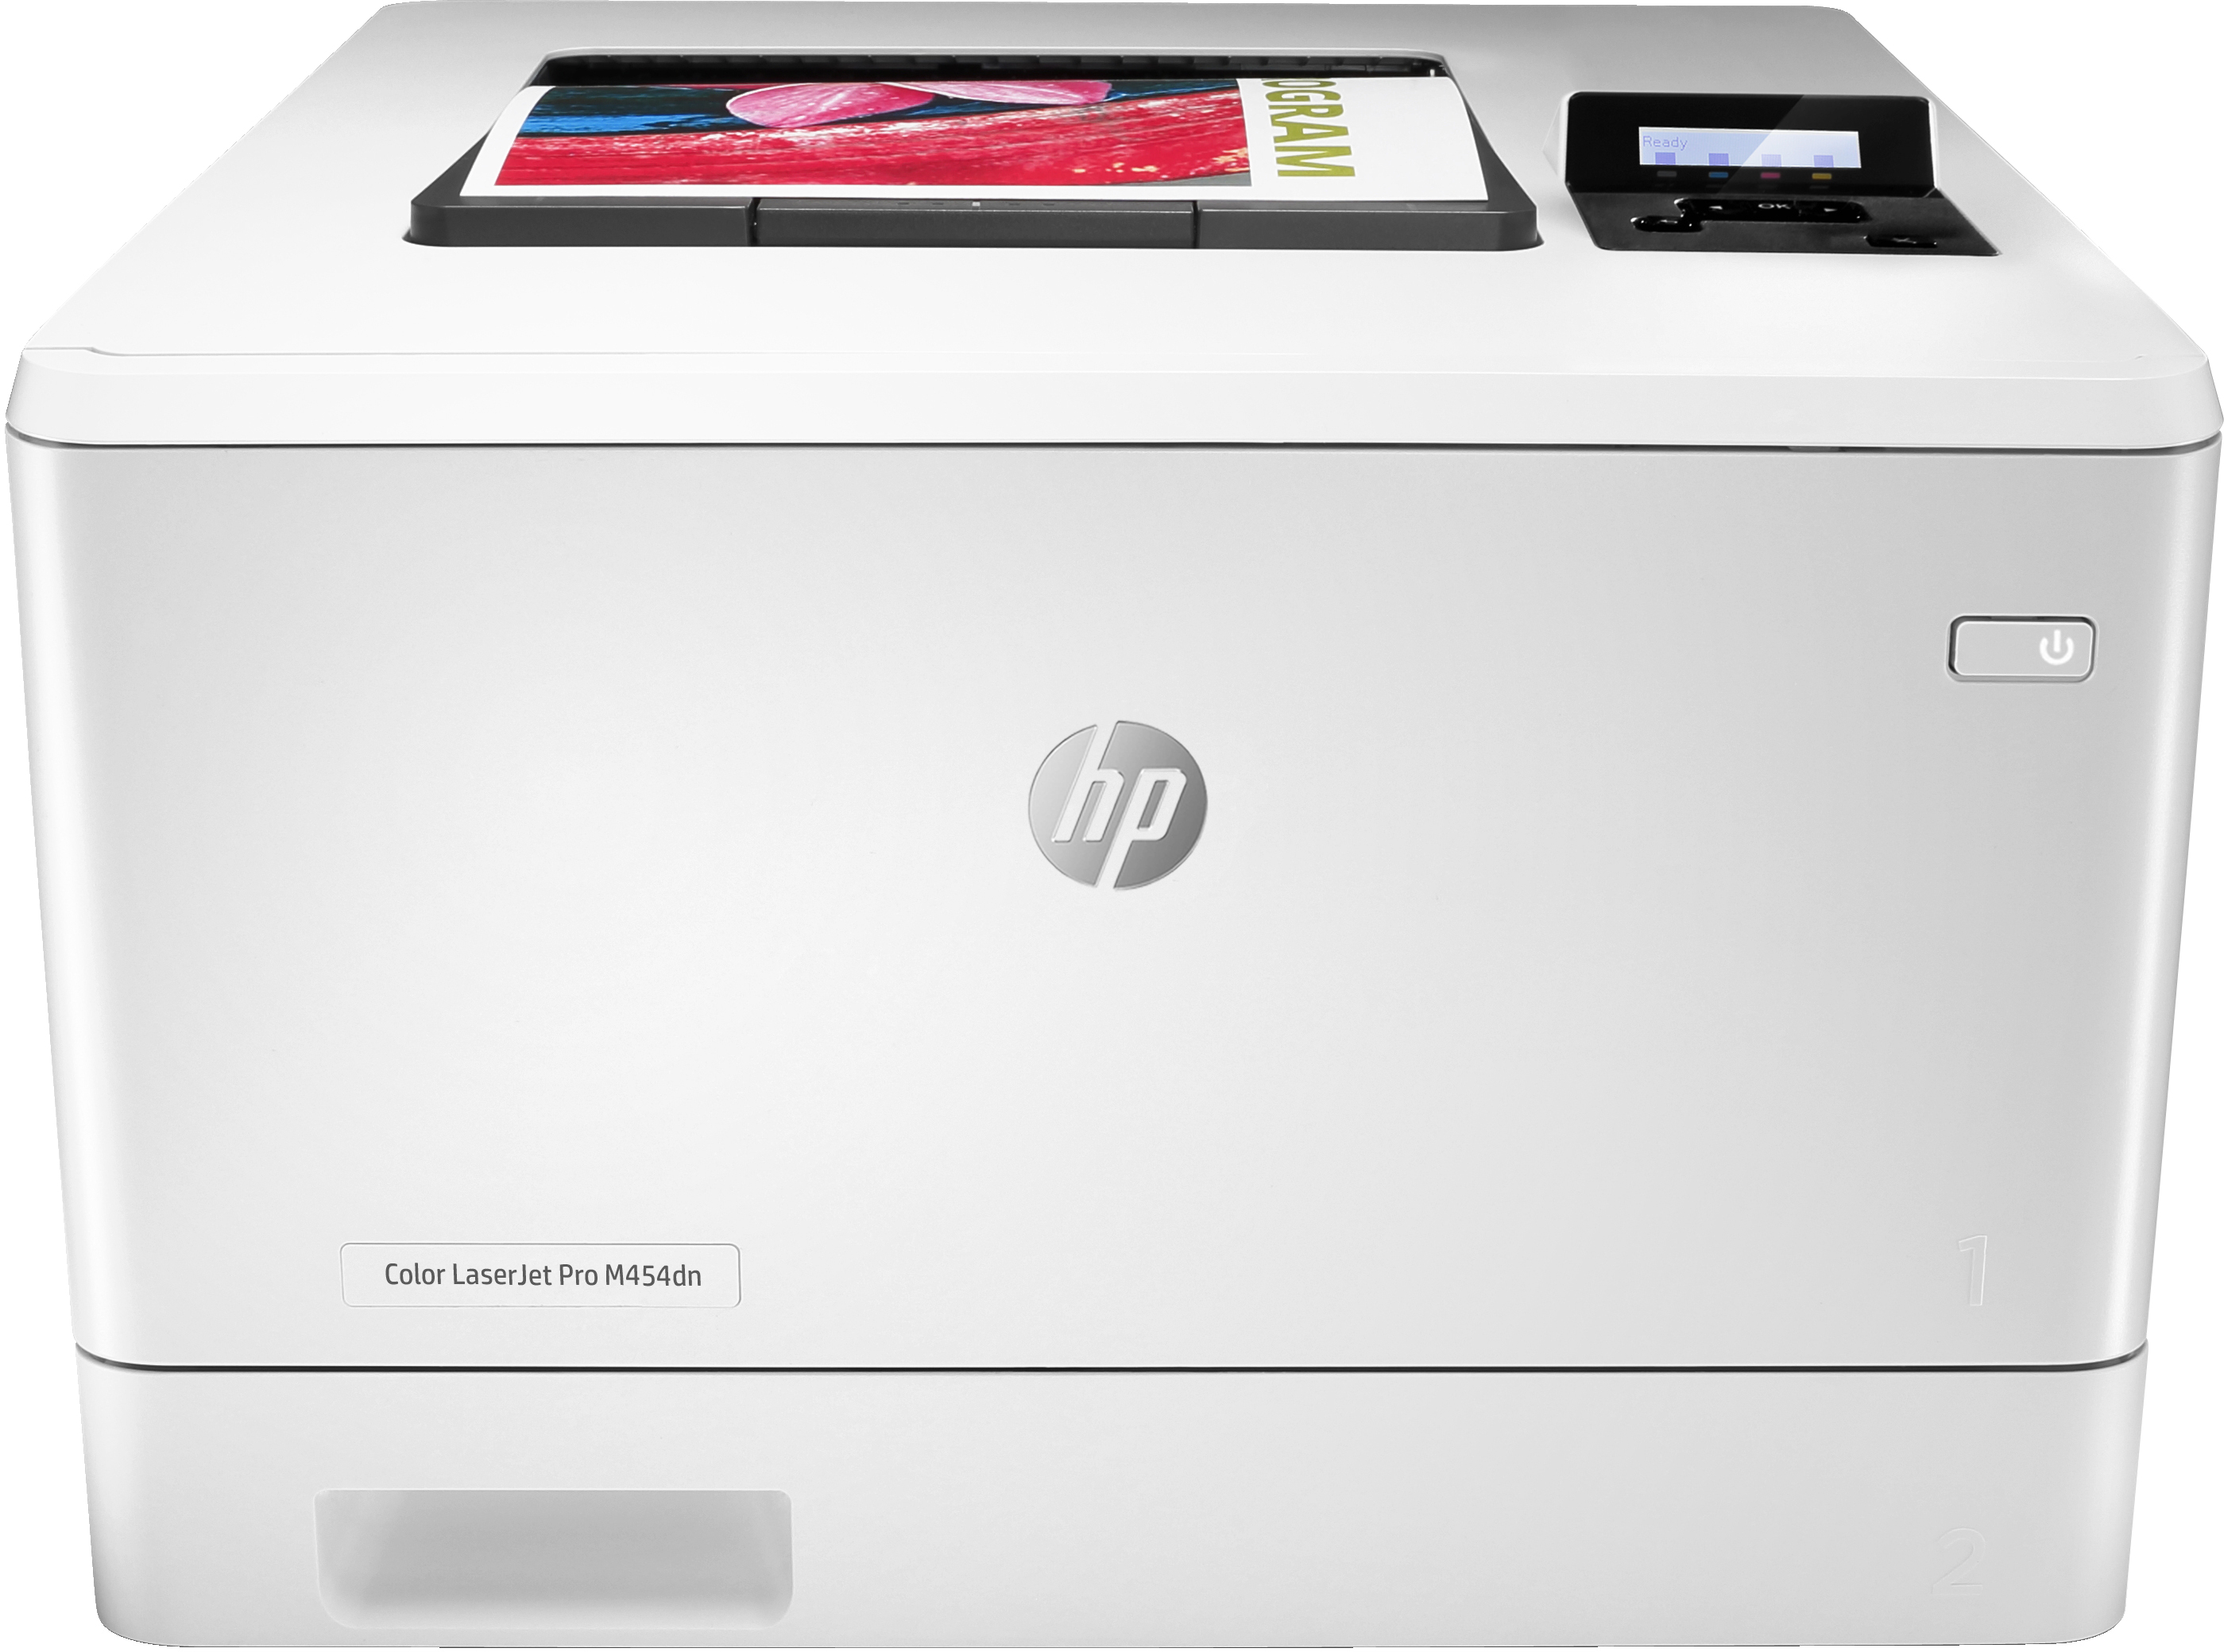 HP Color LaserJet Pro M454dn, Utskrift, Dubbelsidig utskrift